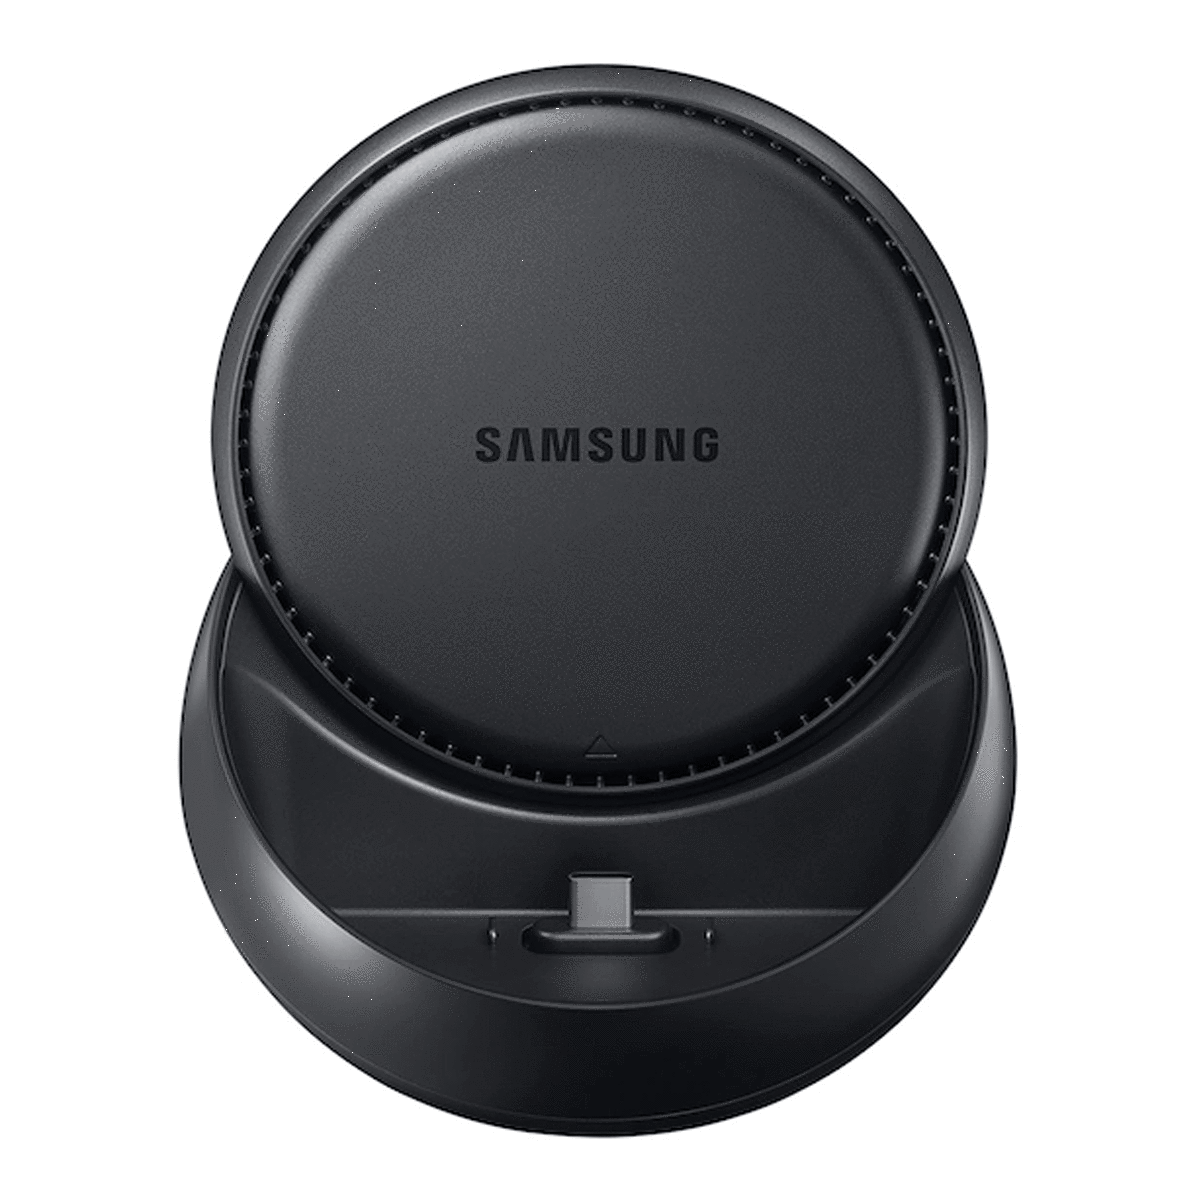 Samsung Dex Docking Station for Galaxy Note8, Galaxy S8/S8+ - Black,